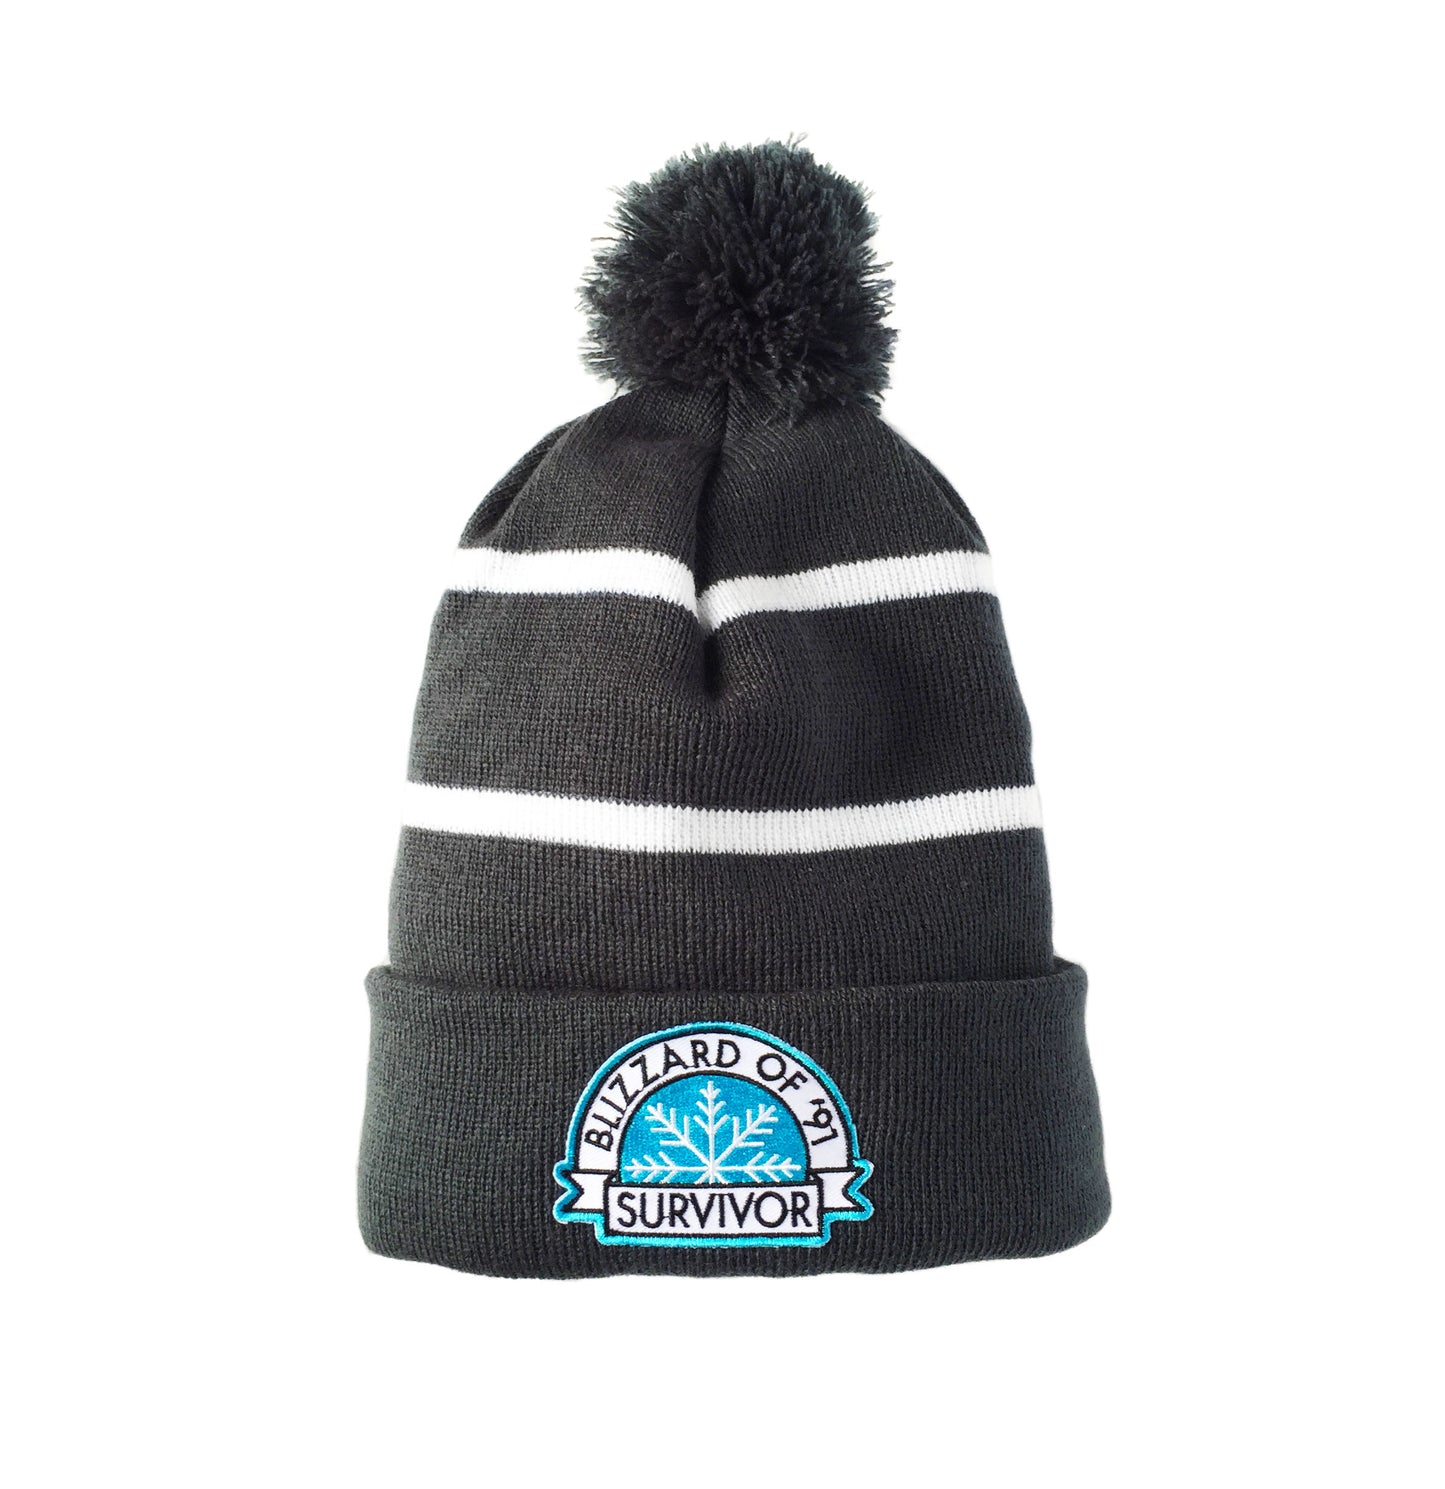 Blizzard of '91 Winter Hat